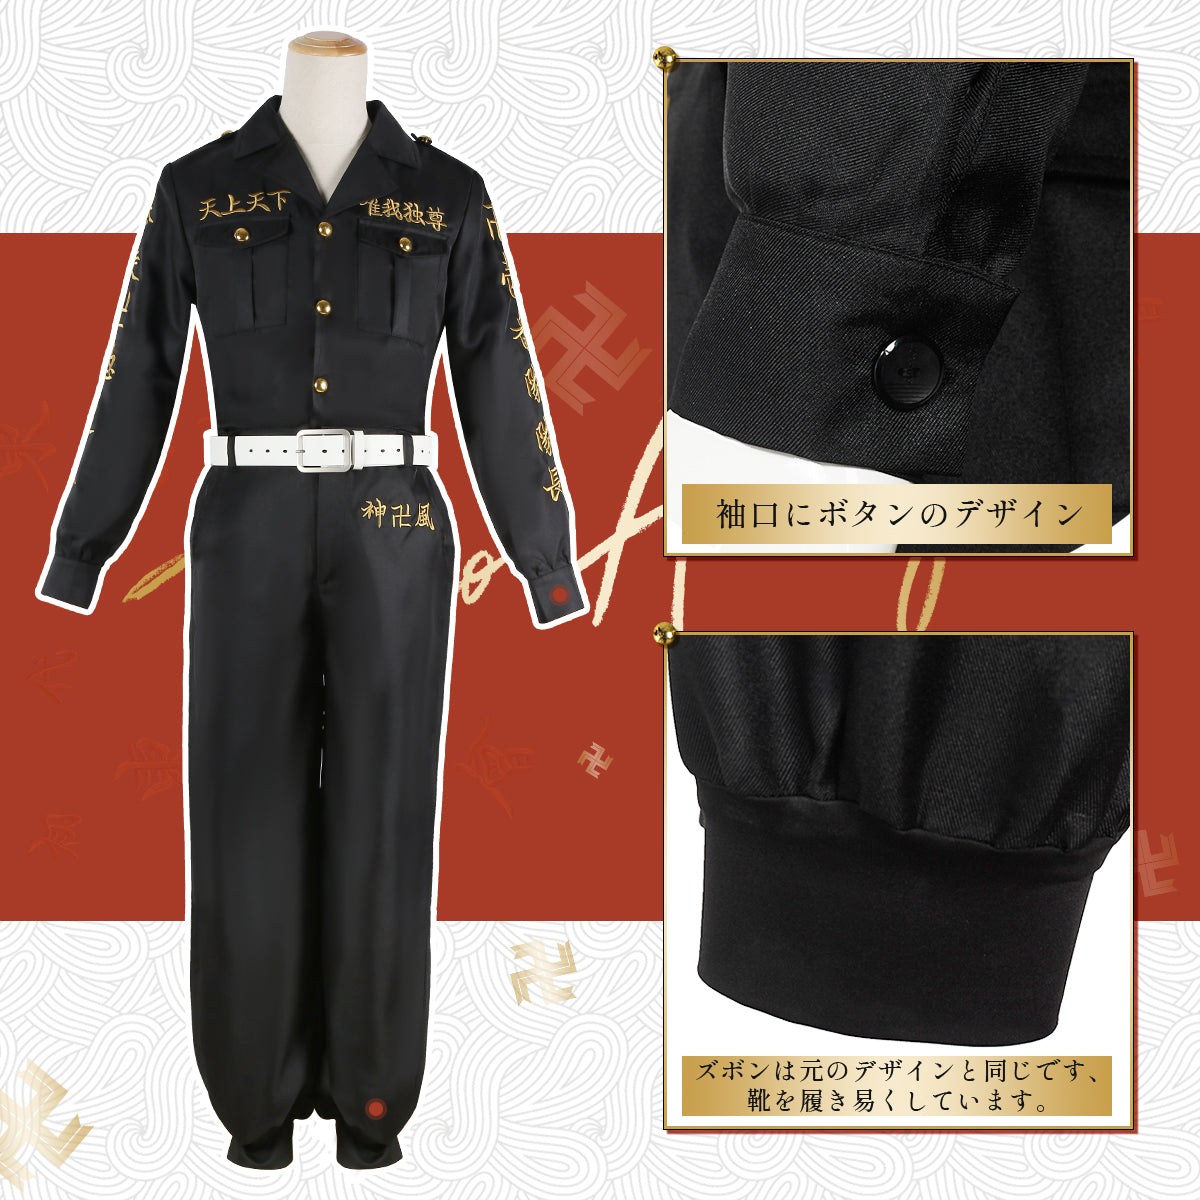 HOLOUN Tokyo Anime Cosplay Costume Second Generation Toman Vice President Chifuyu Matsuno Special Attack Uniform Embroidery Halloween Christmas Gift